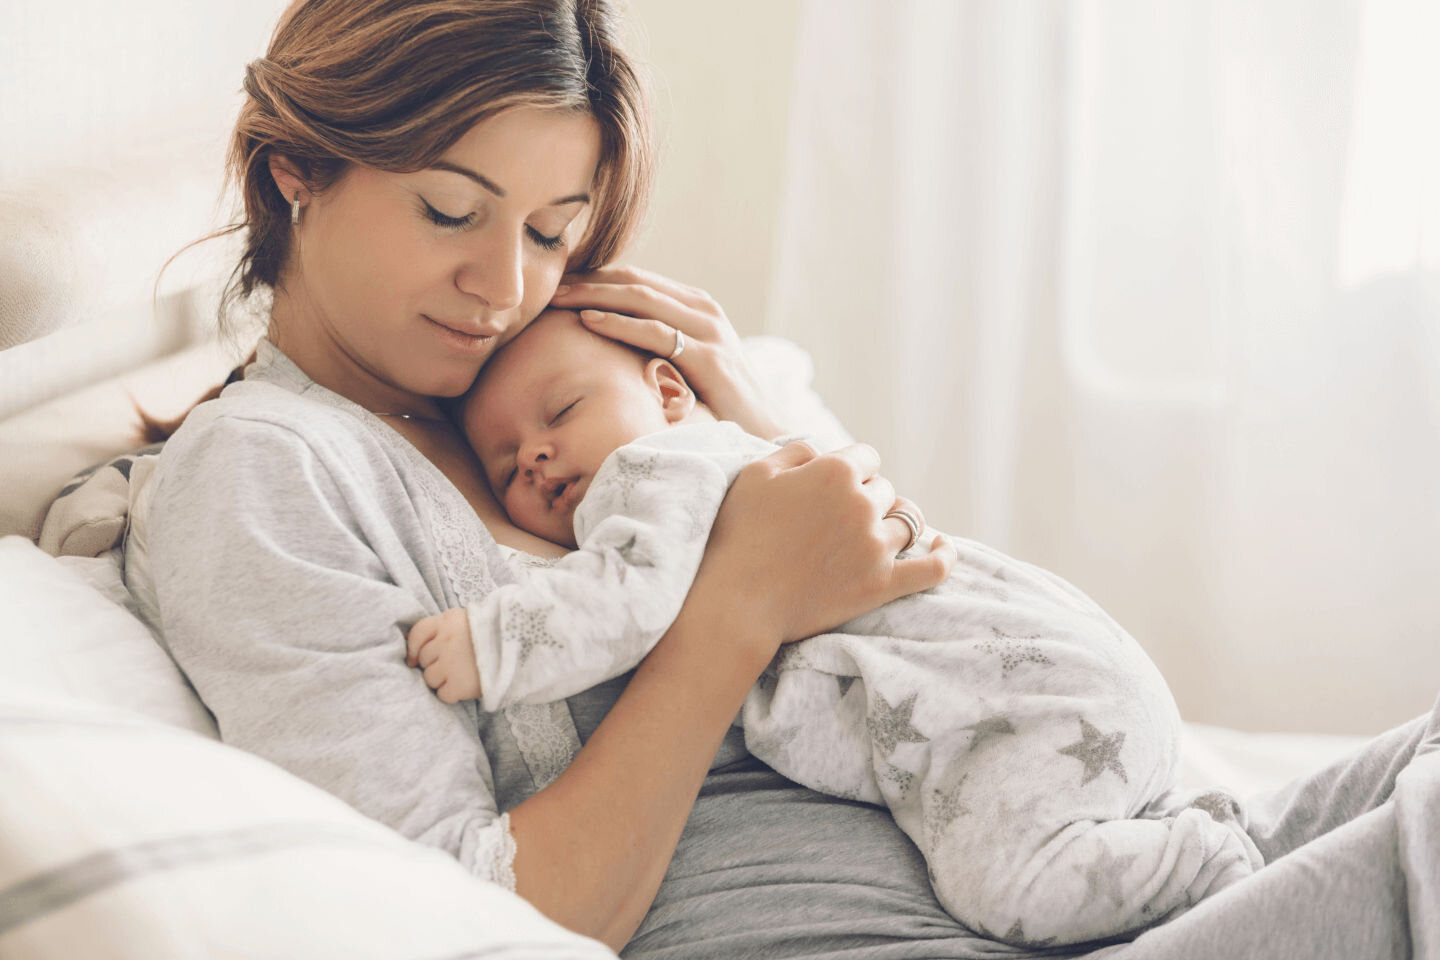 Baby falls asleep during breastfeeding session